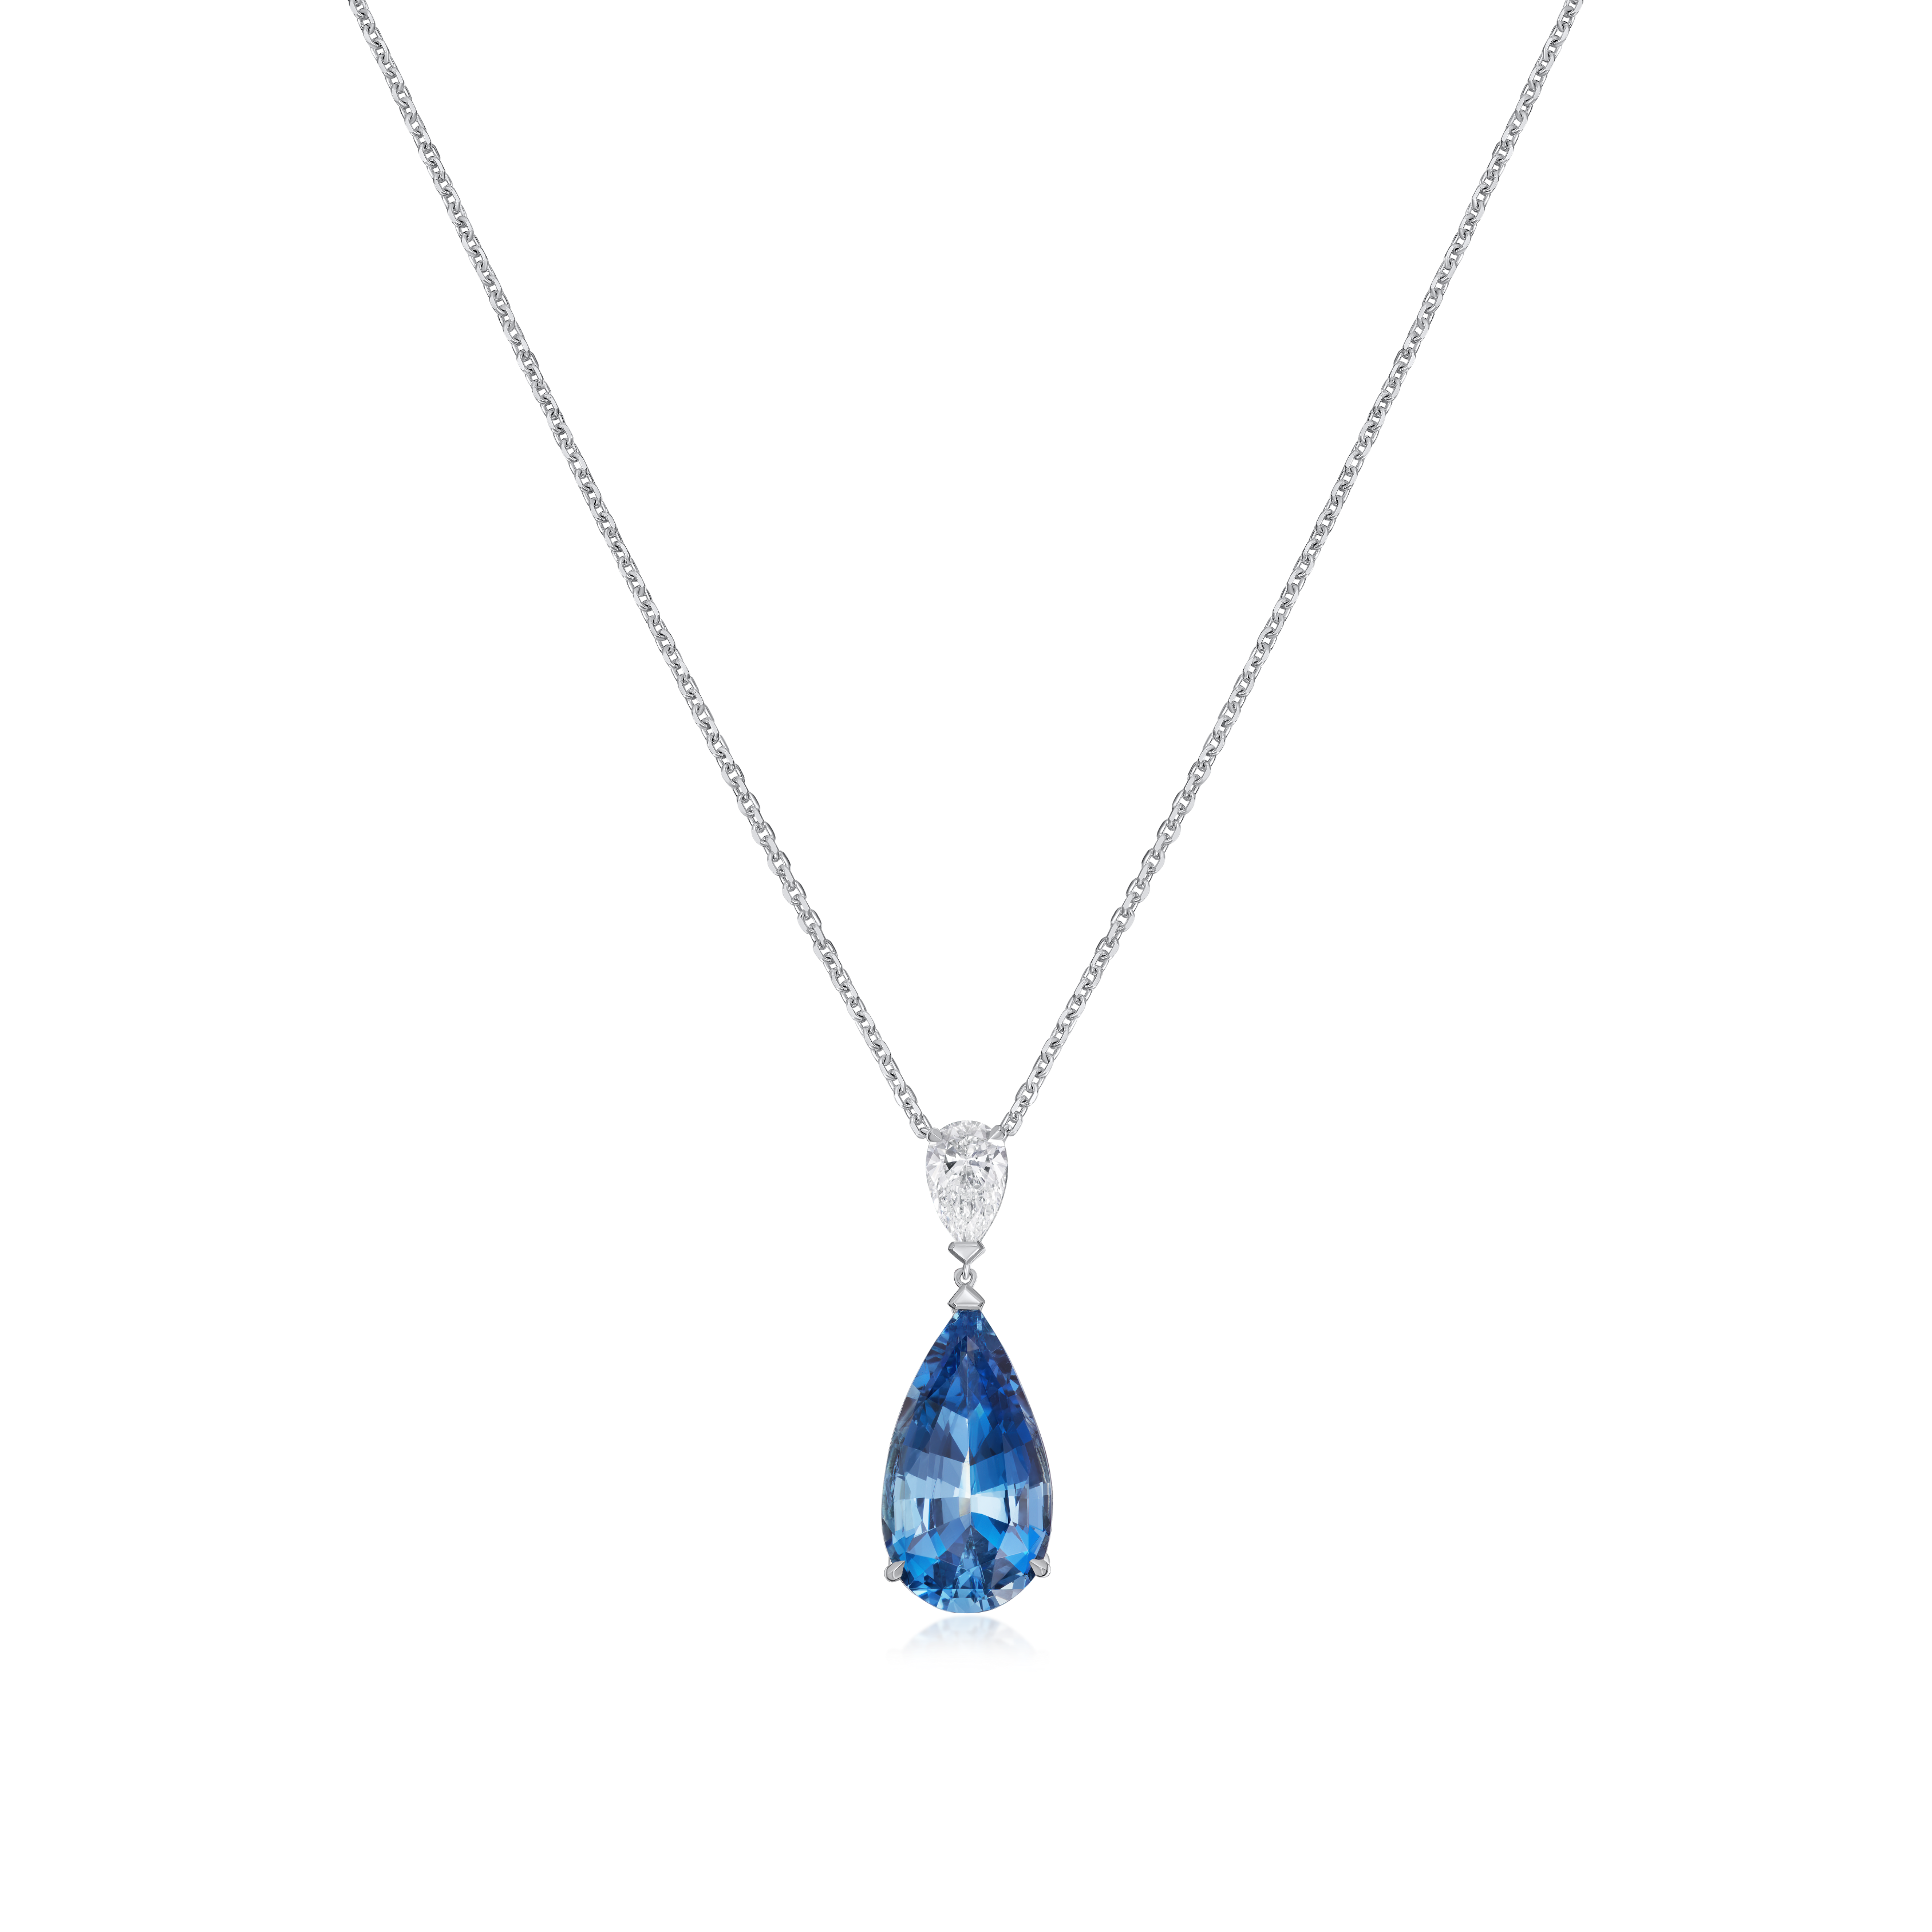 7.09cts Pear-Shape Aquamarine and Diamond Pendant